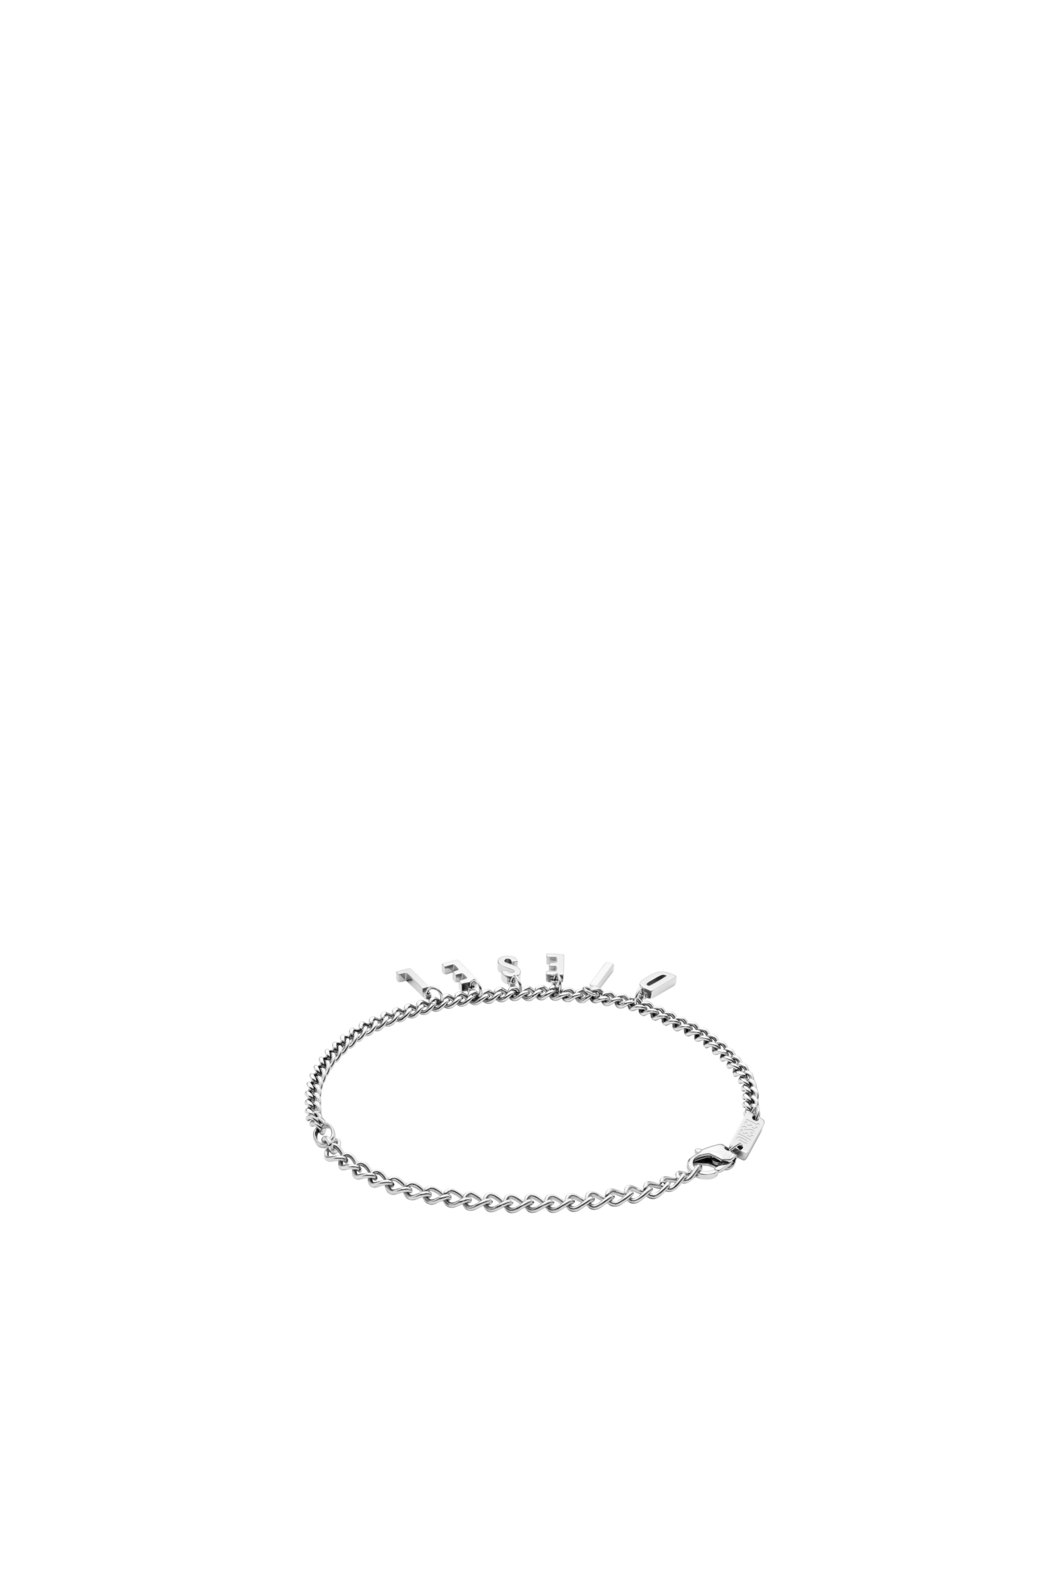 Stainless Steel Chain Bracelet/Anklet